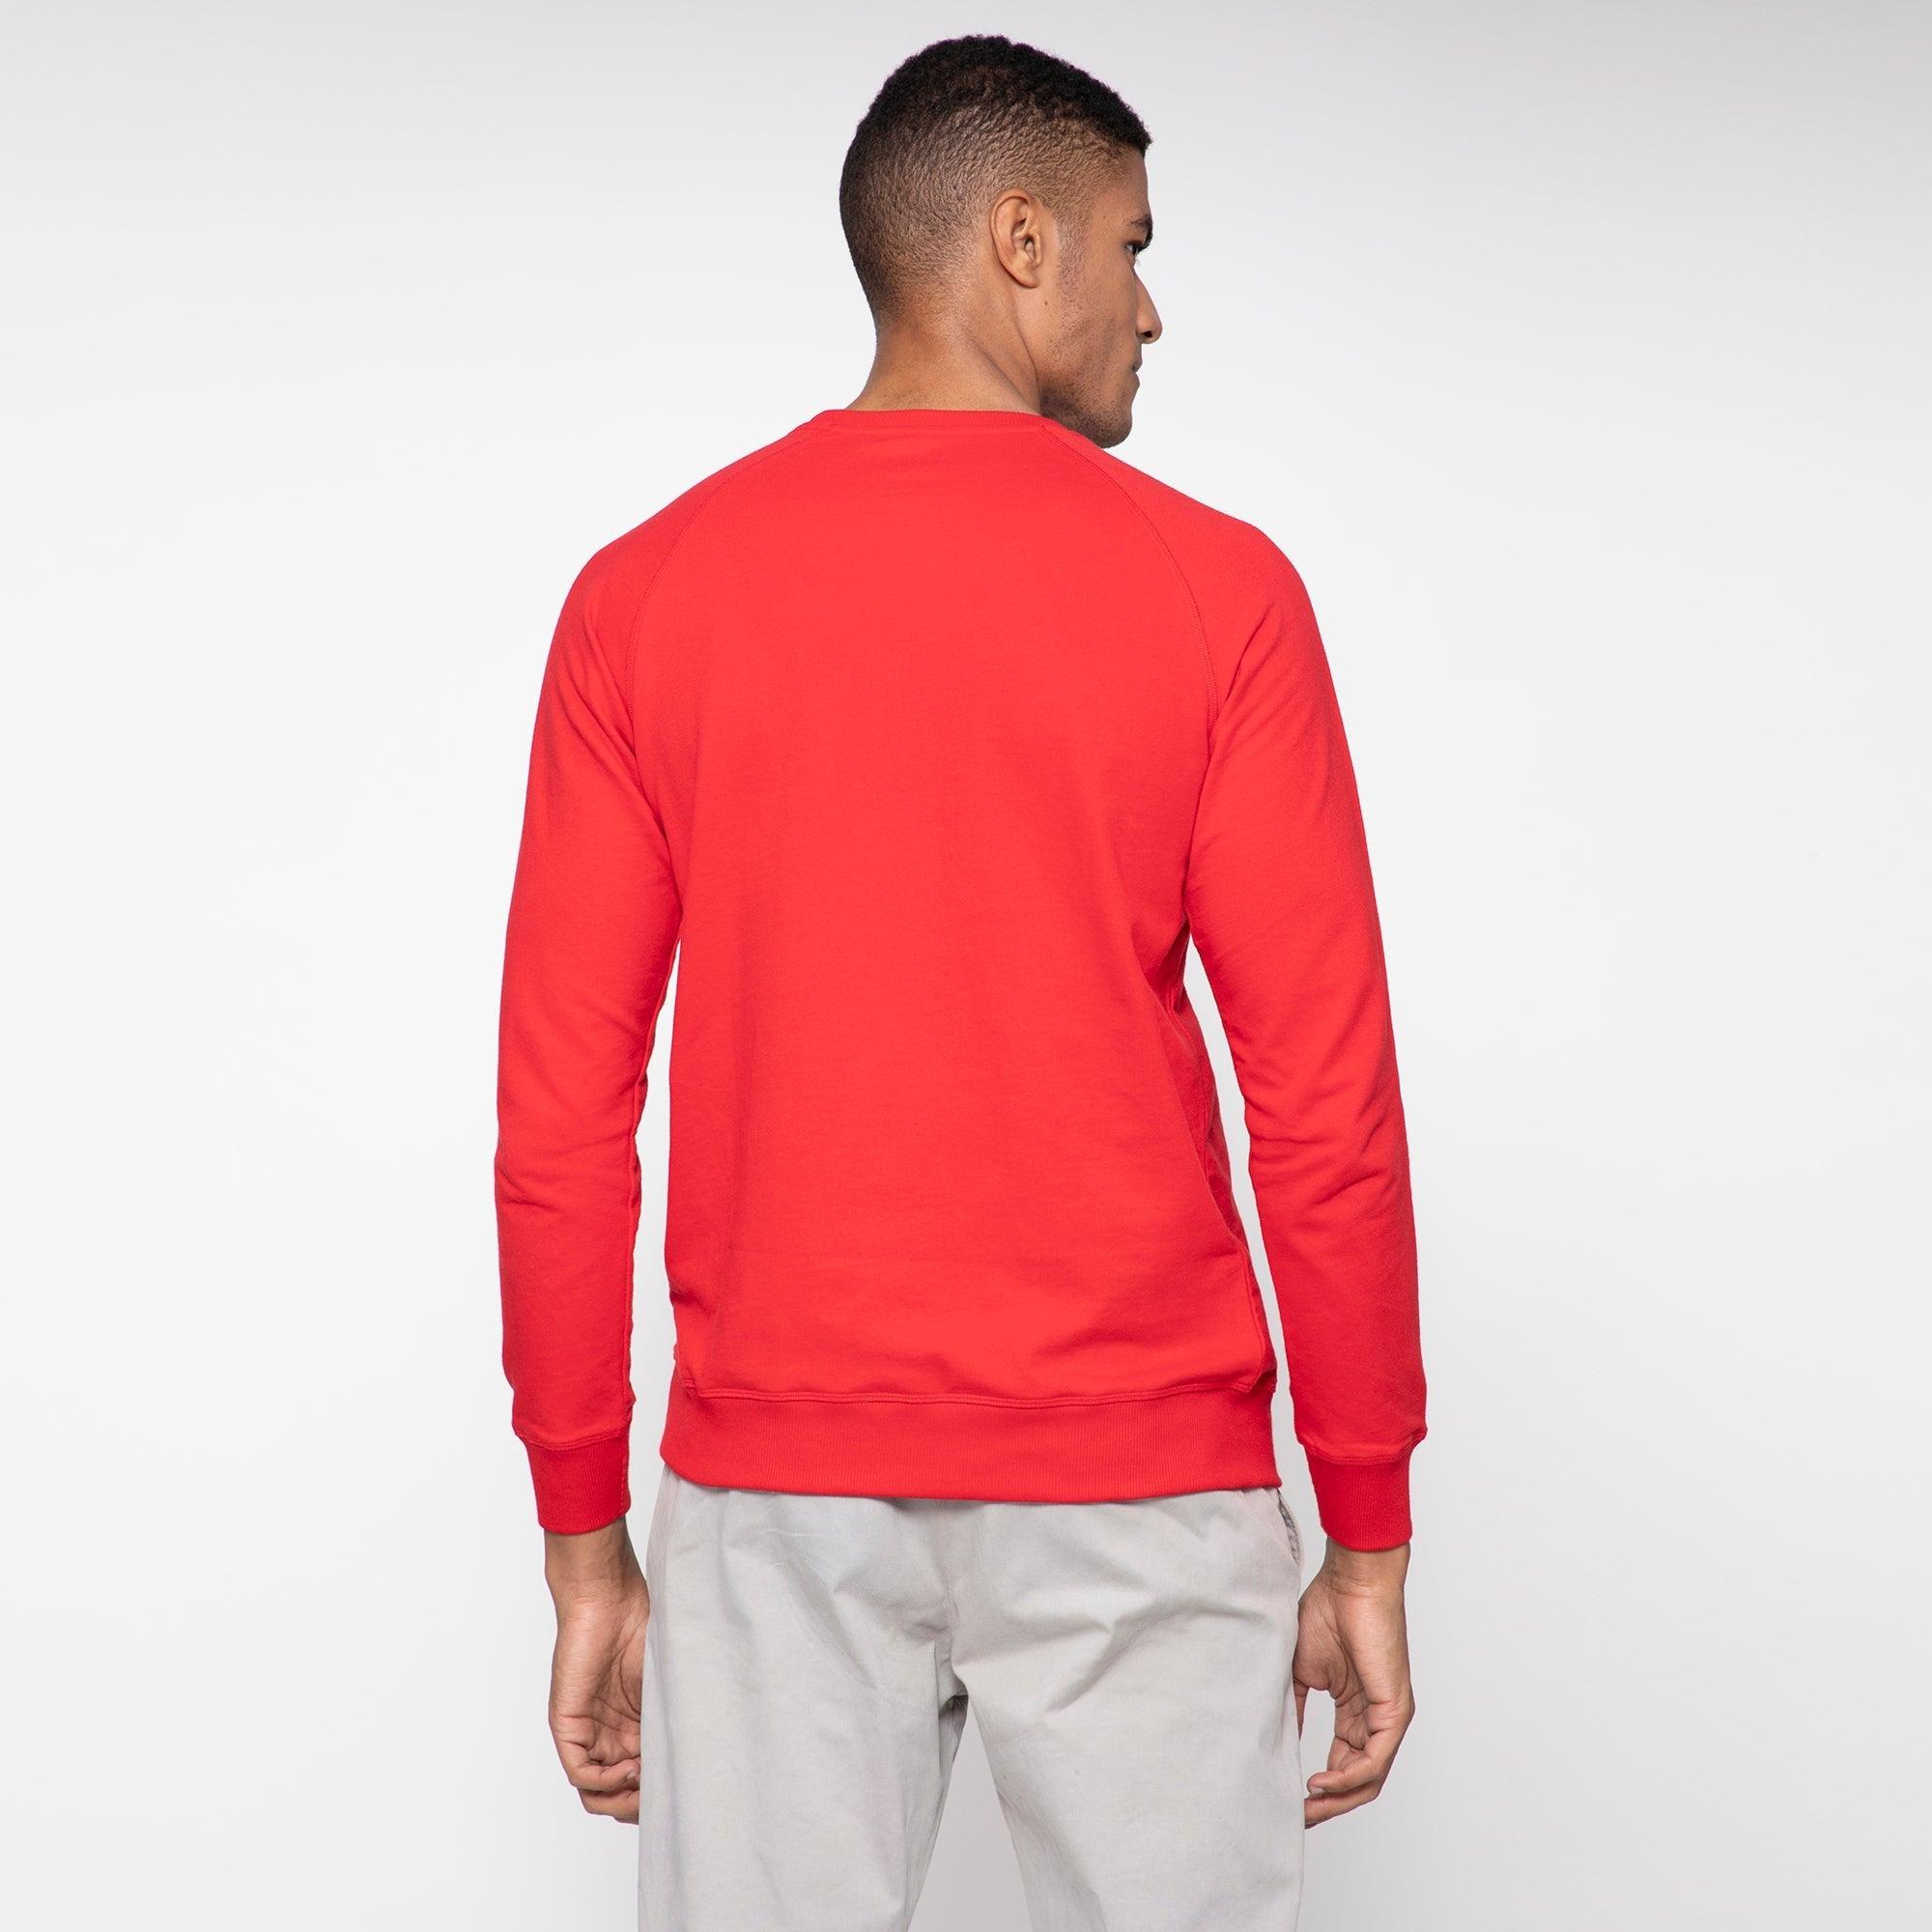 Sporto Men's Solid Sweatshirts